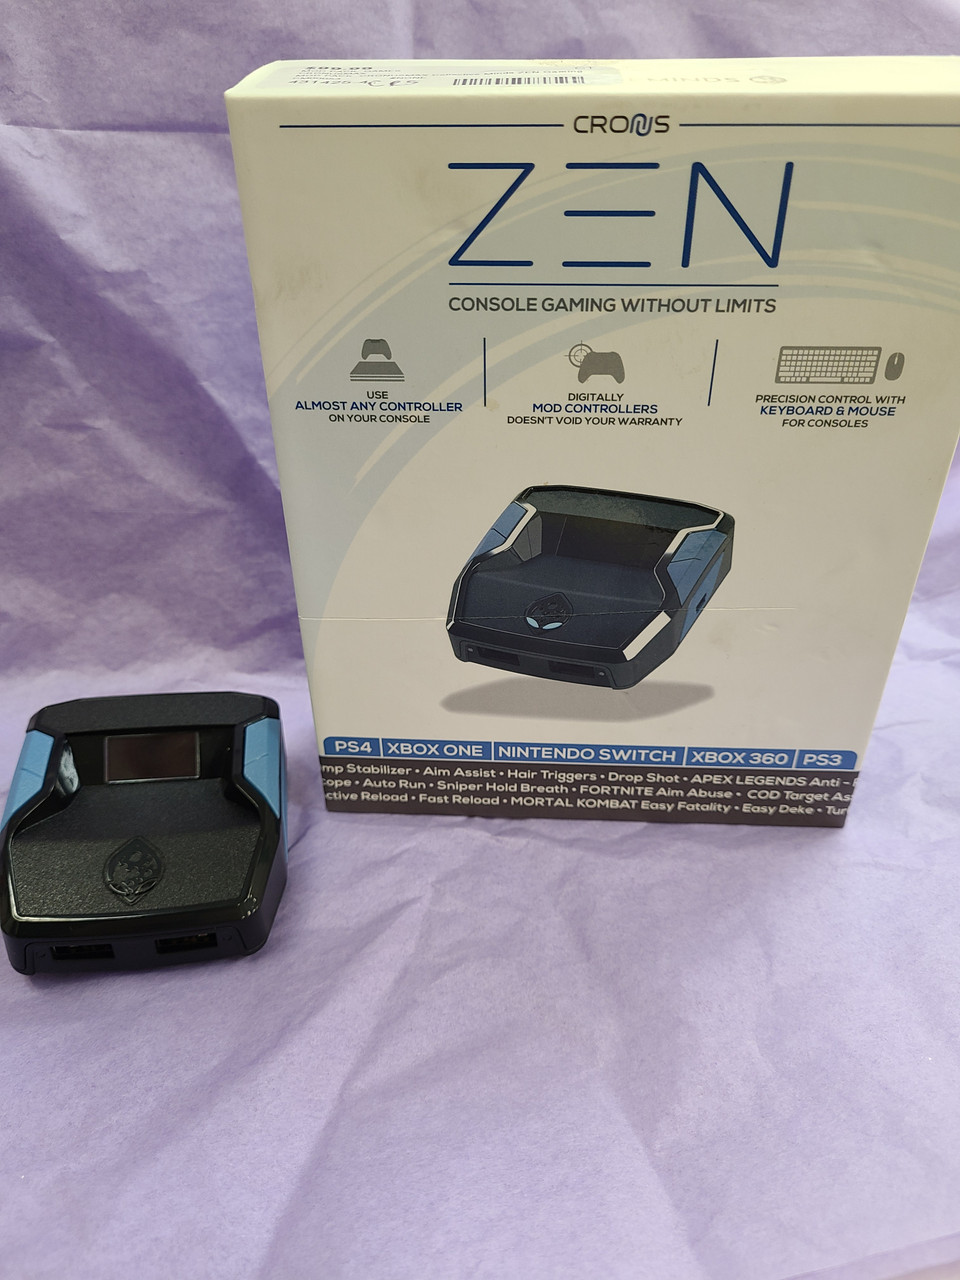 How to Connect Cronus Zen Wirelessly (PS4 + XBOX) 